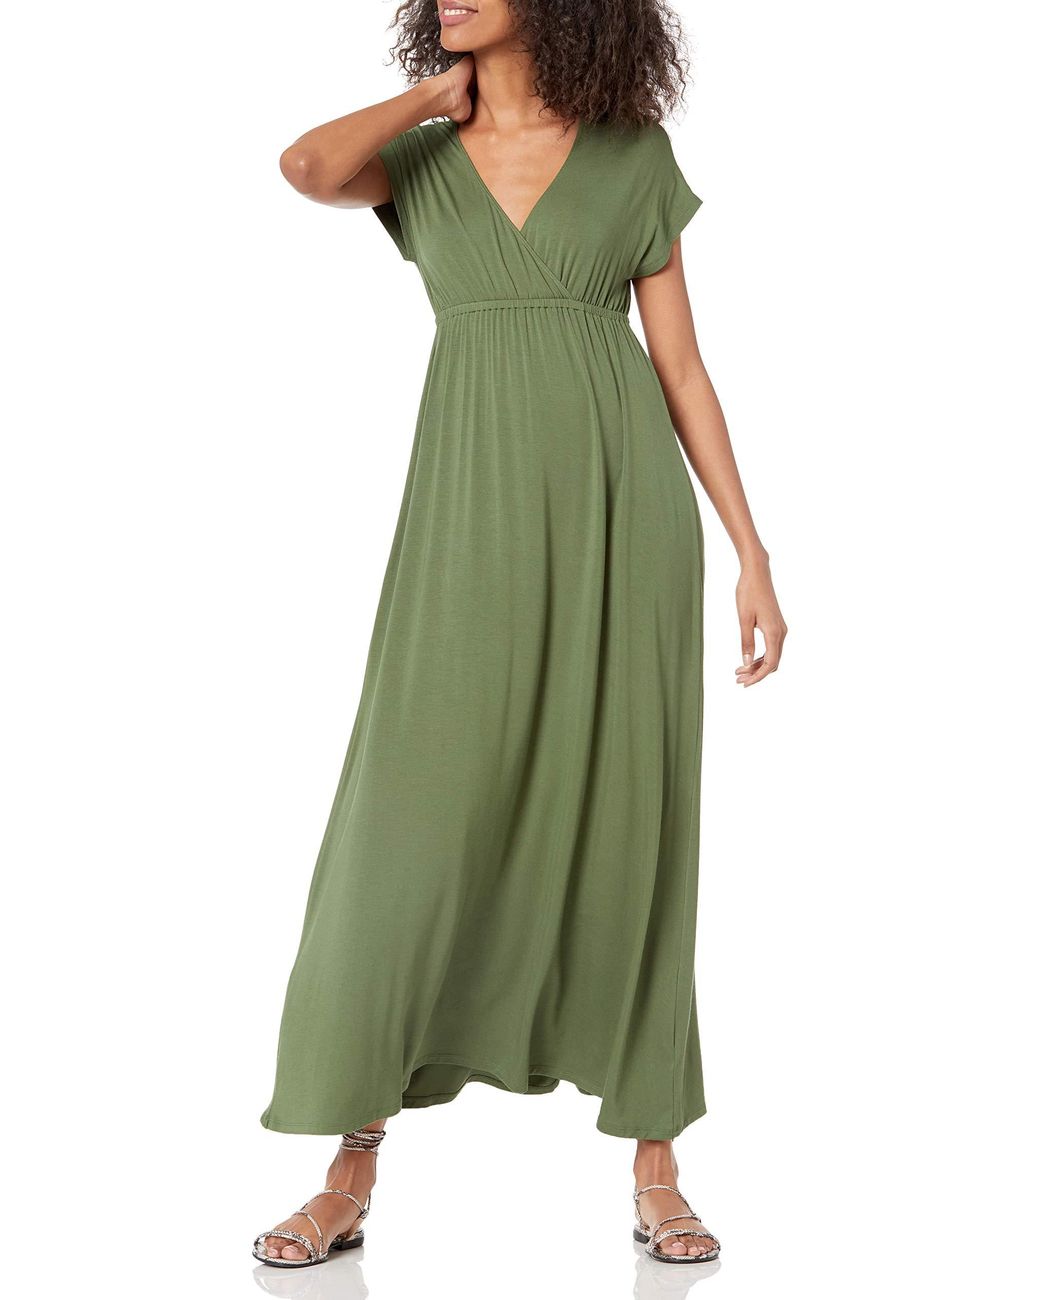 Amazon Essentials Solid Surplice Maxi Dress in Light Olive (Green) - Lyst